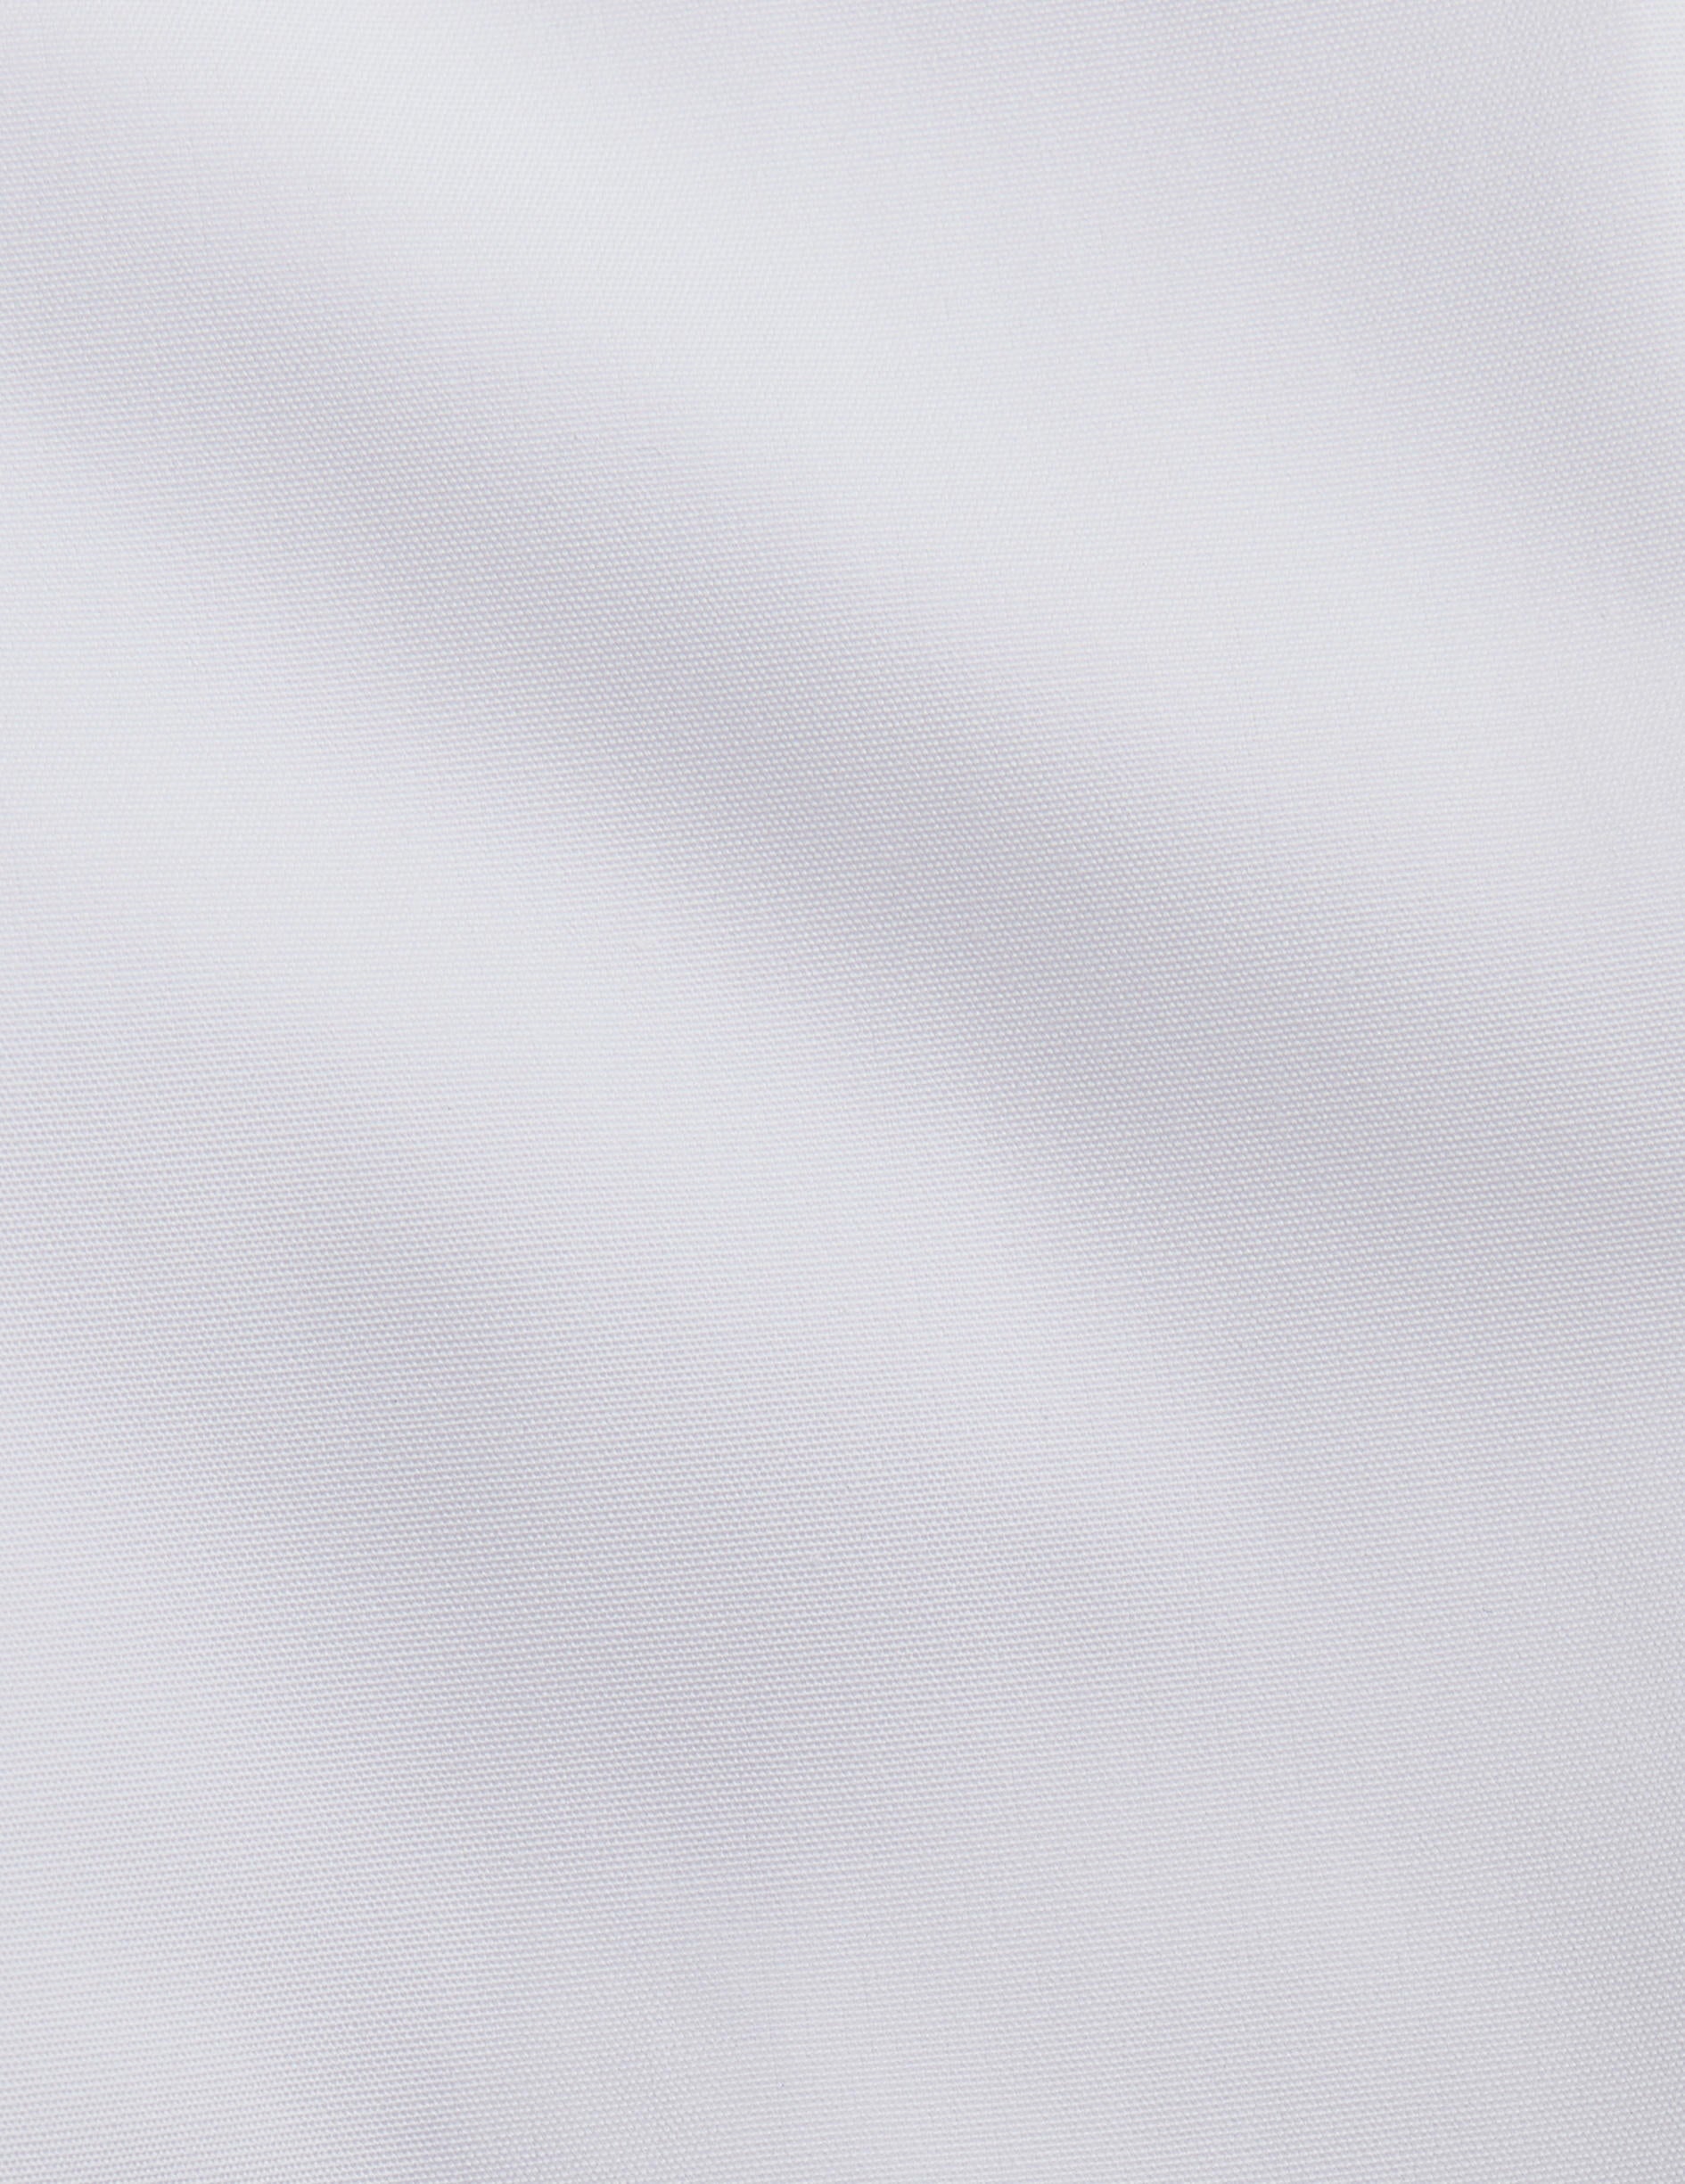 Chemise Semi-ajustée blanche - Popeline - Col Napolitain